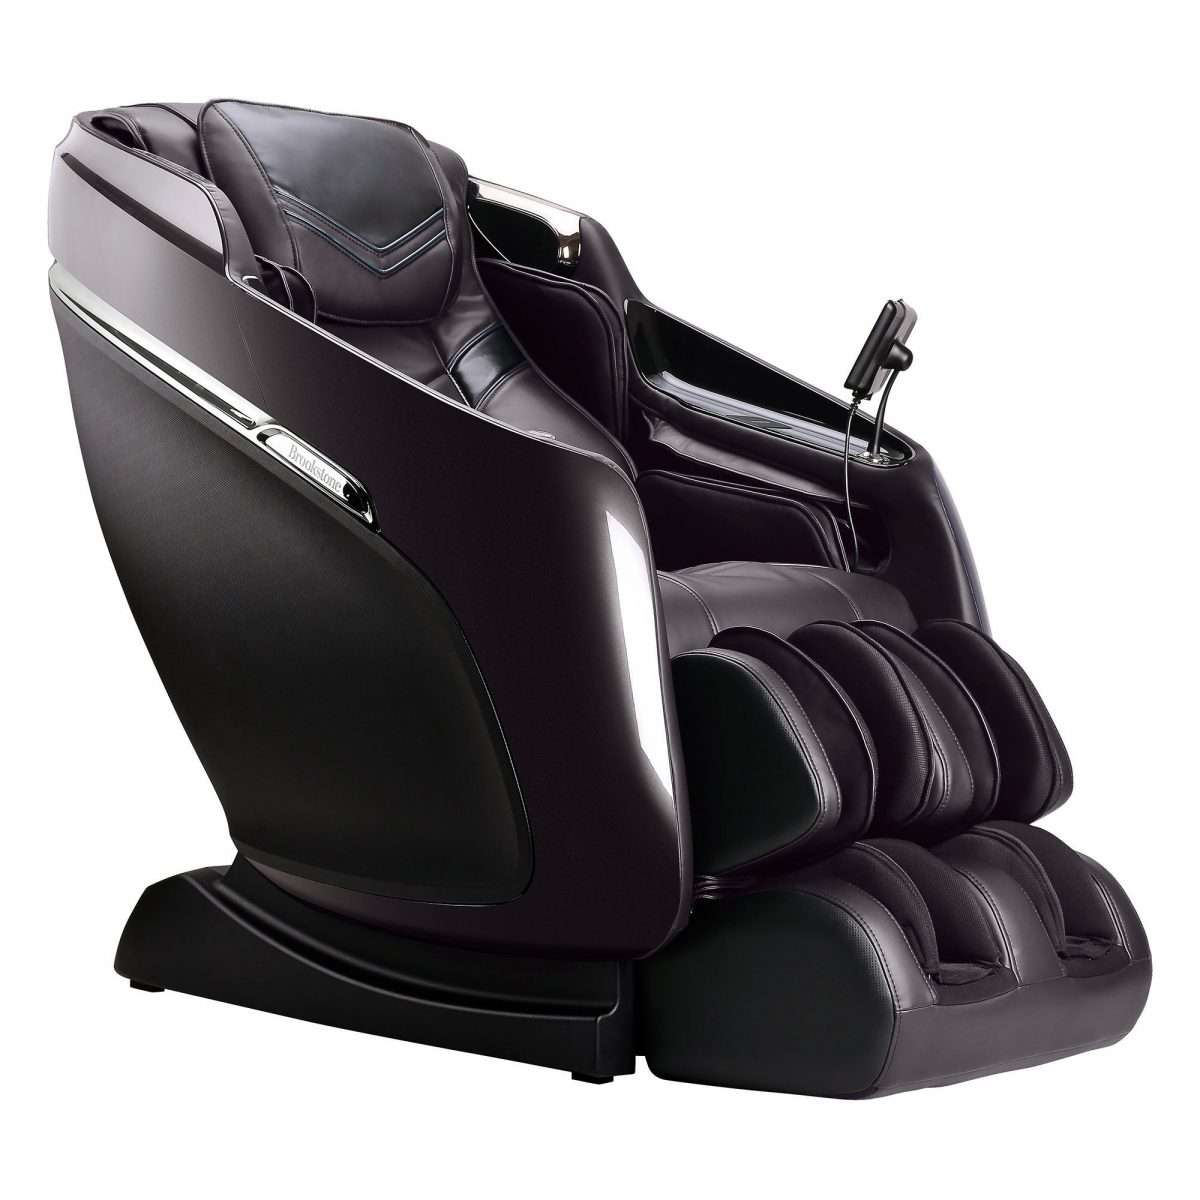 Brookstone Mach Ix Massage Chair